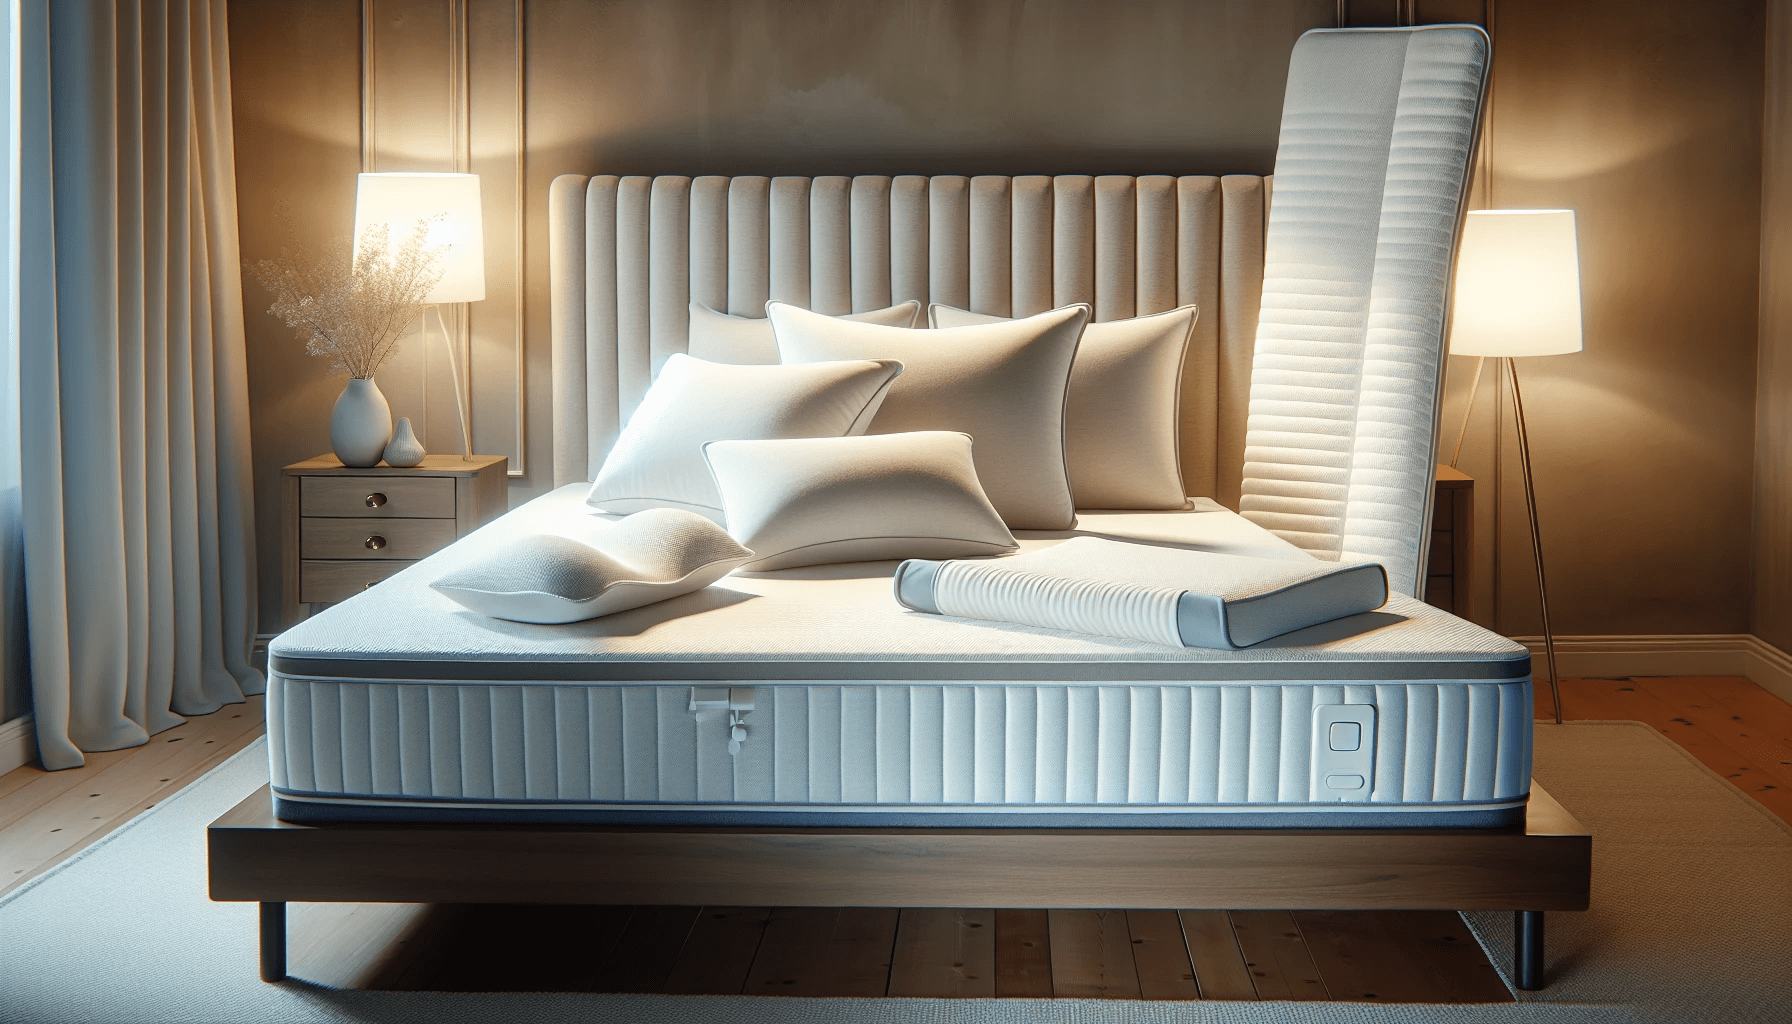 Enhancing comfort with mattress accessories